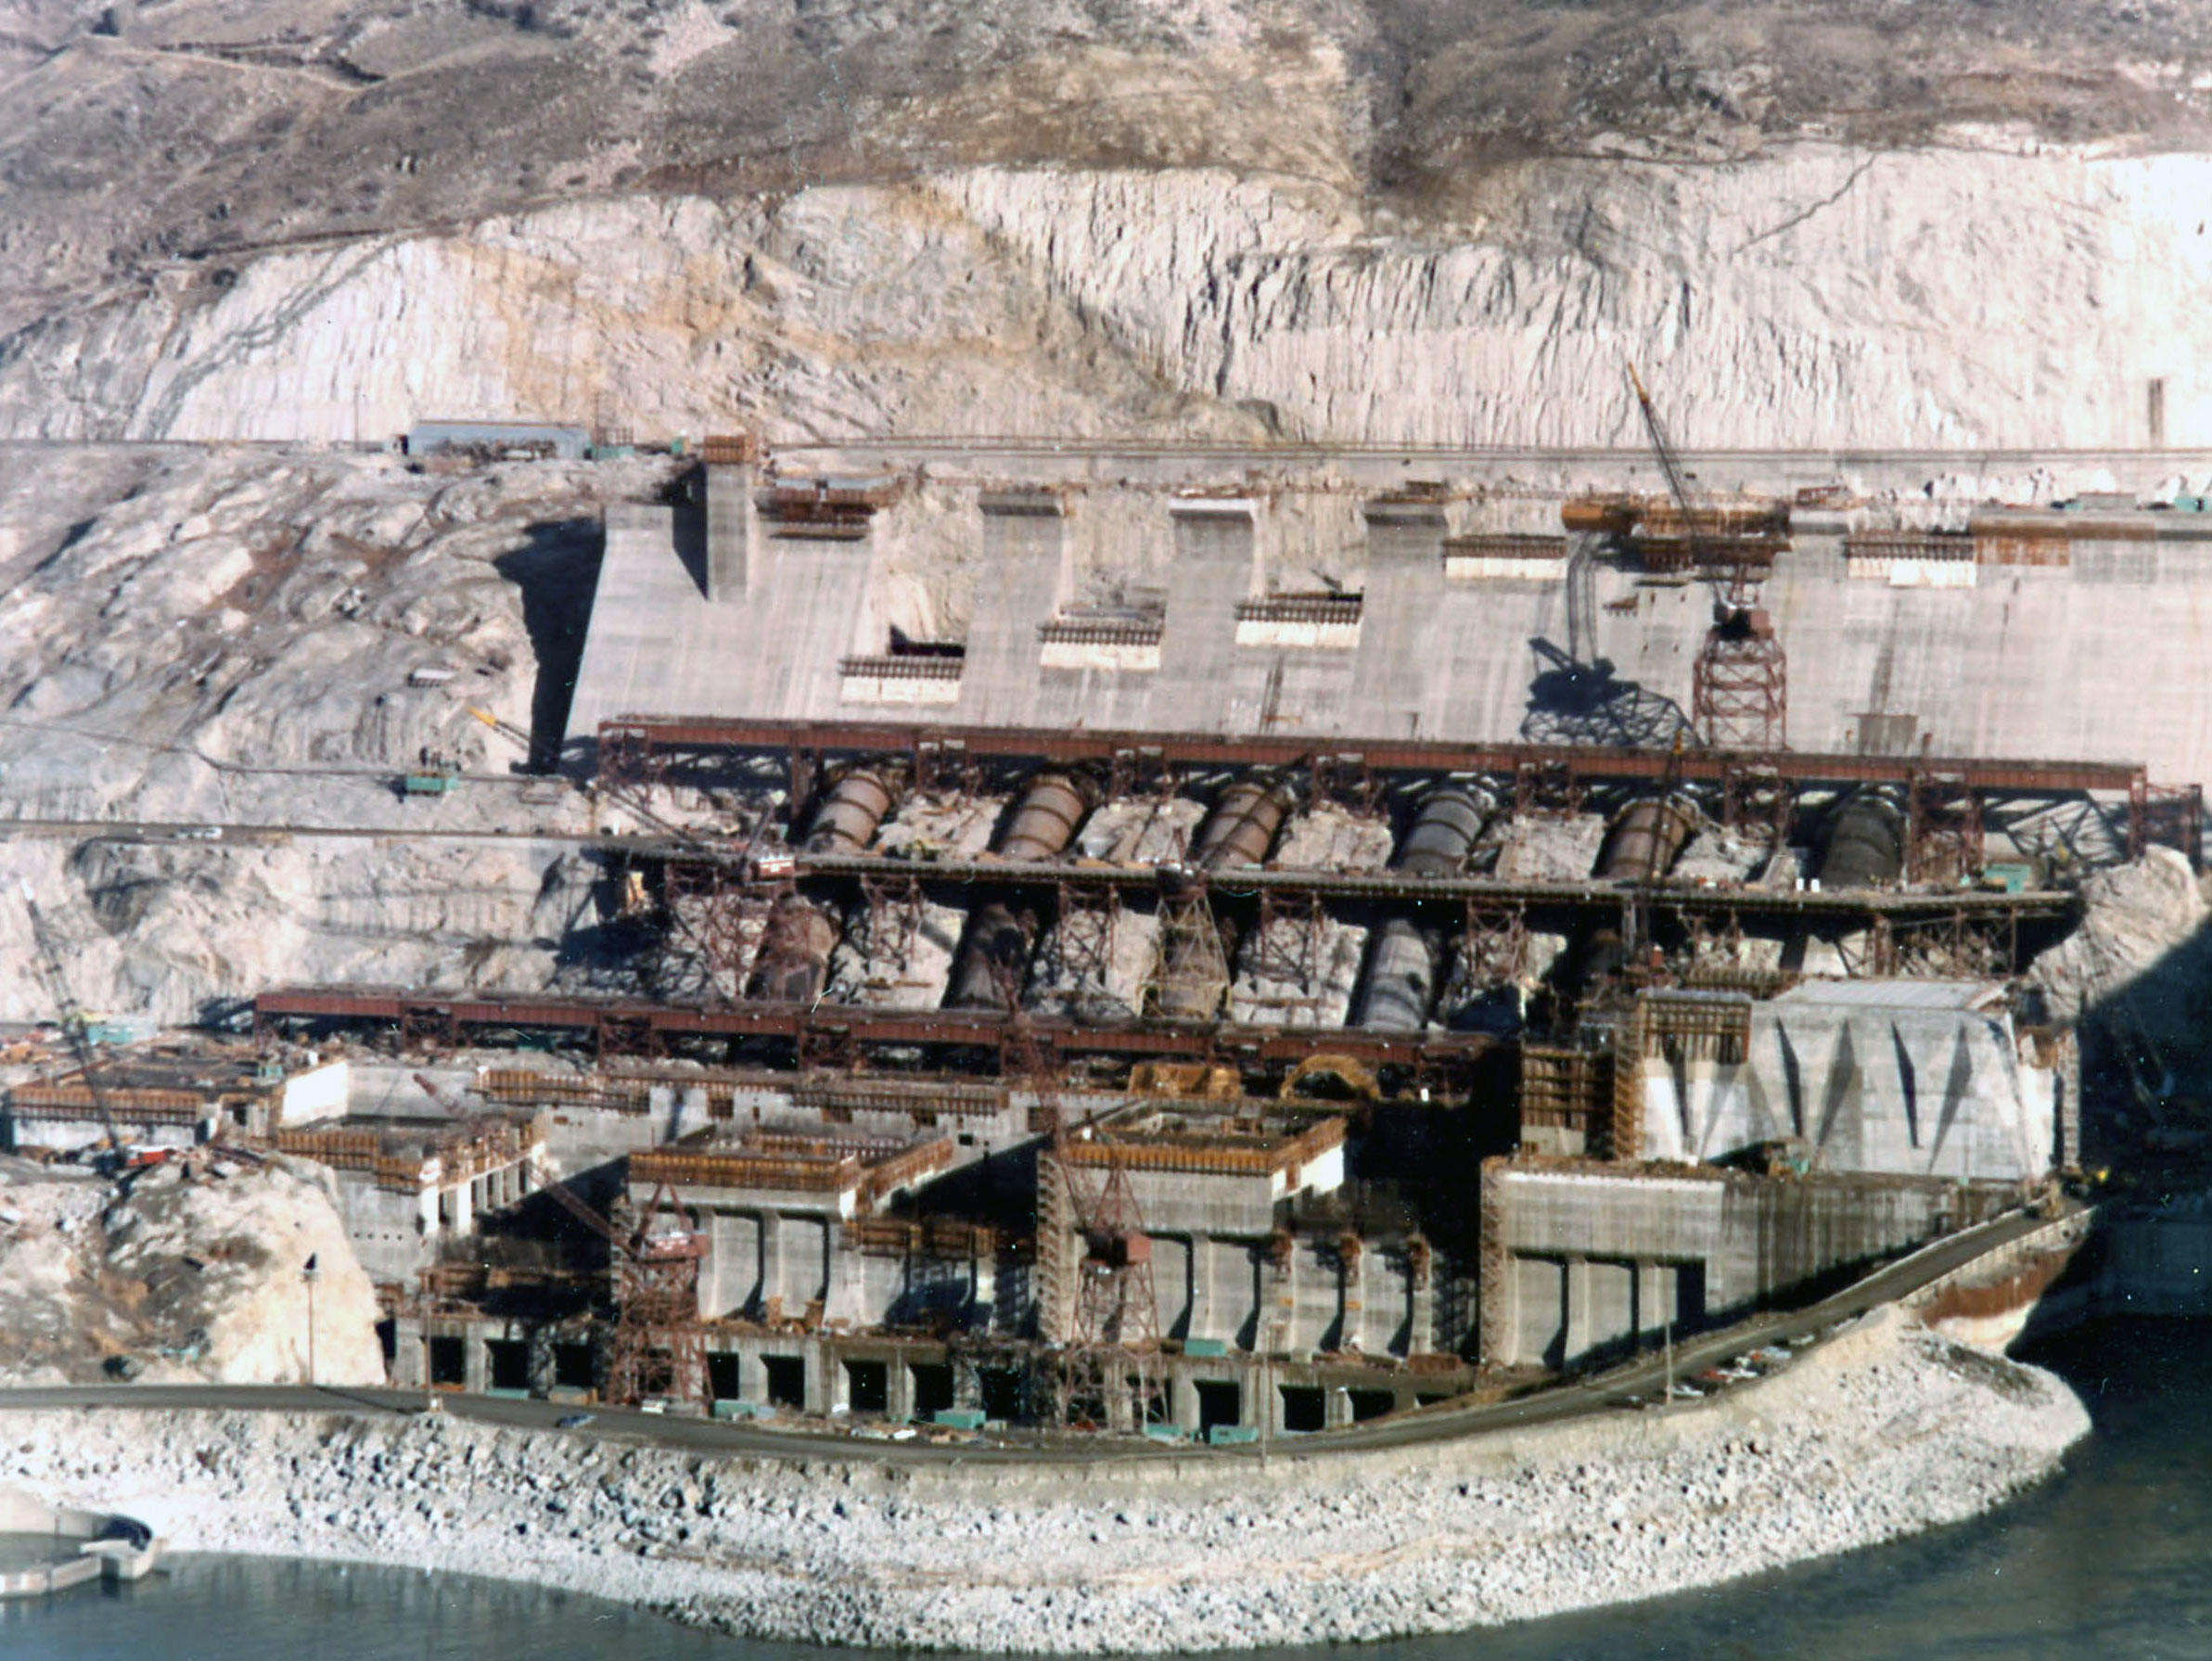 February 21, 1973. Nathaniel Washington Power Plant construction at Grand Coulee Dam.